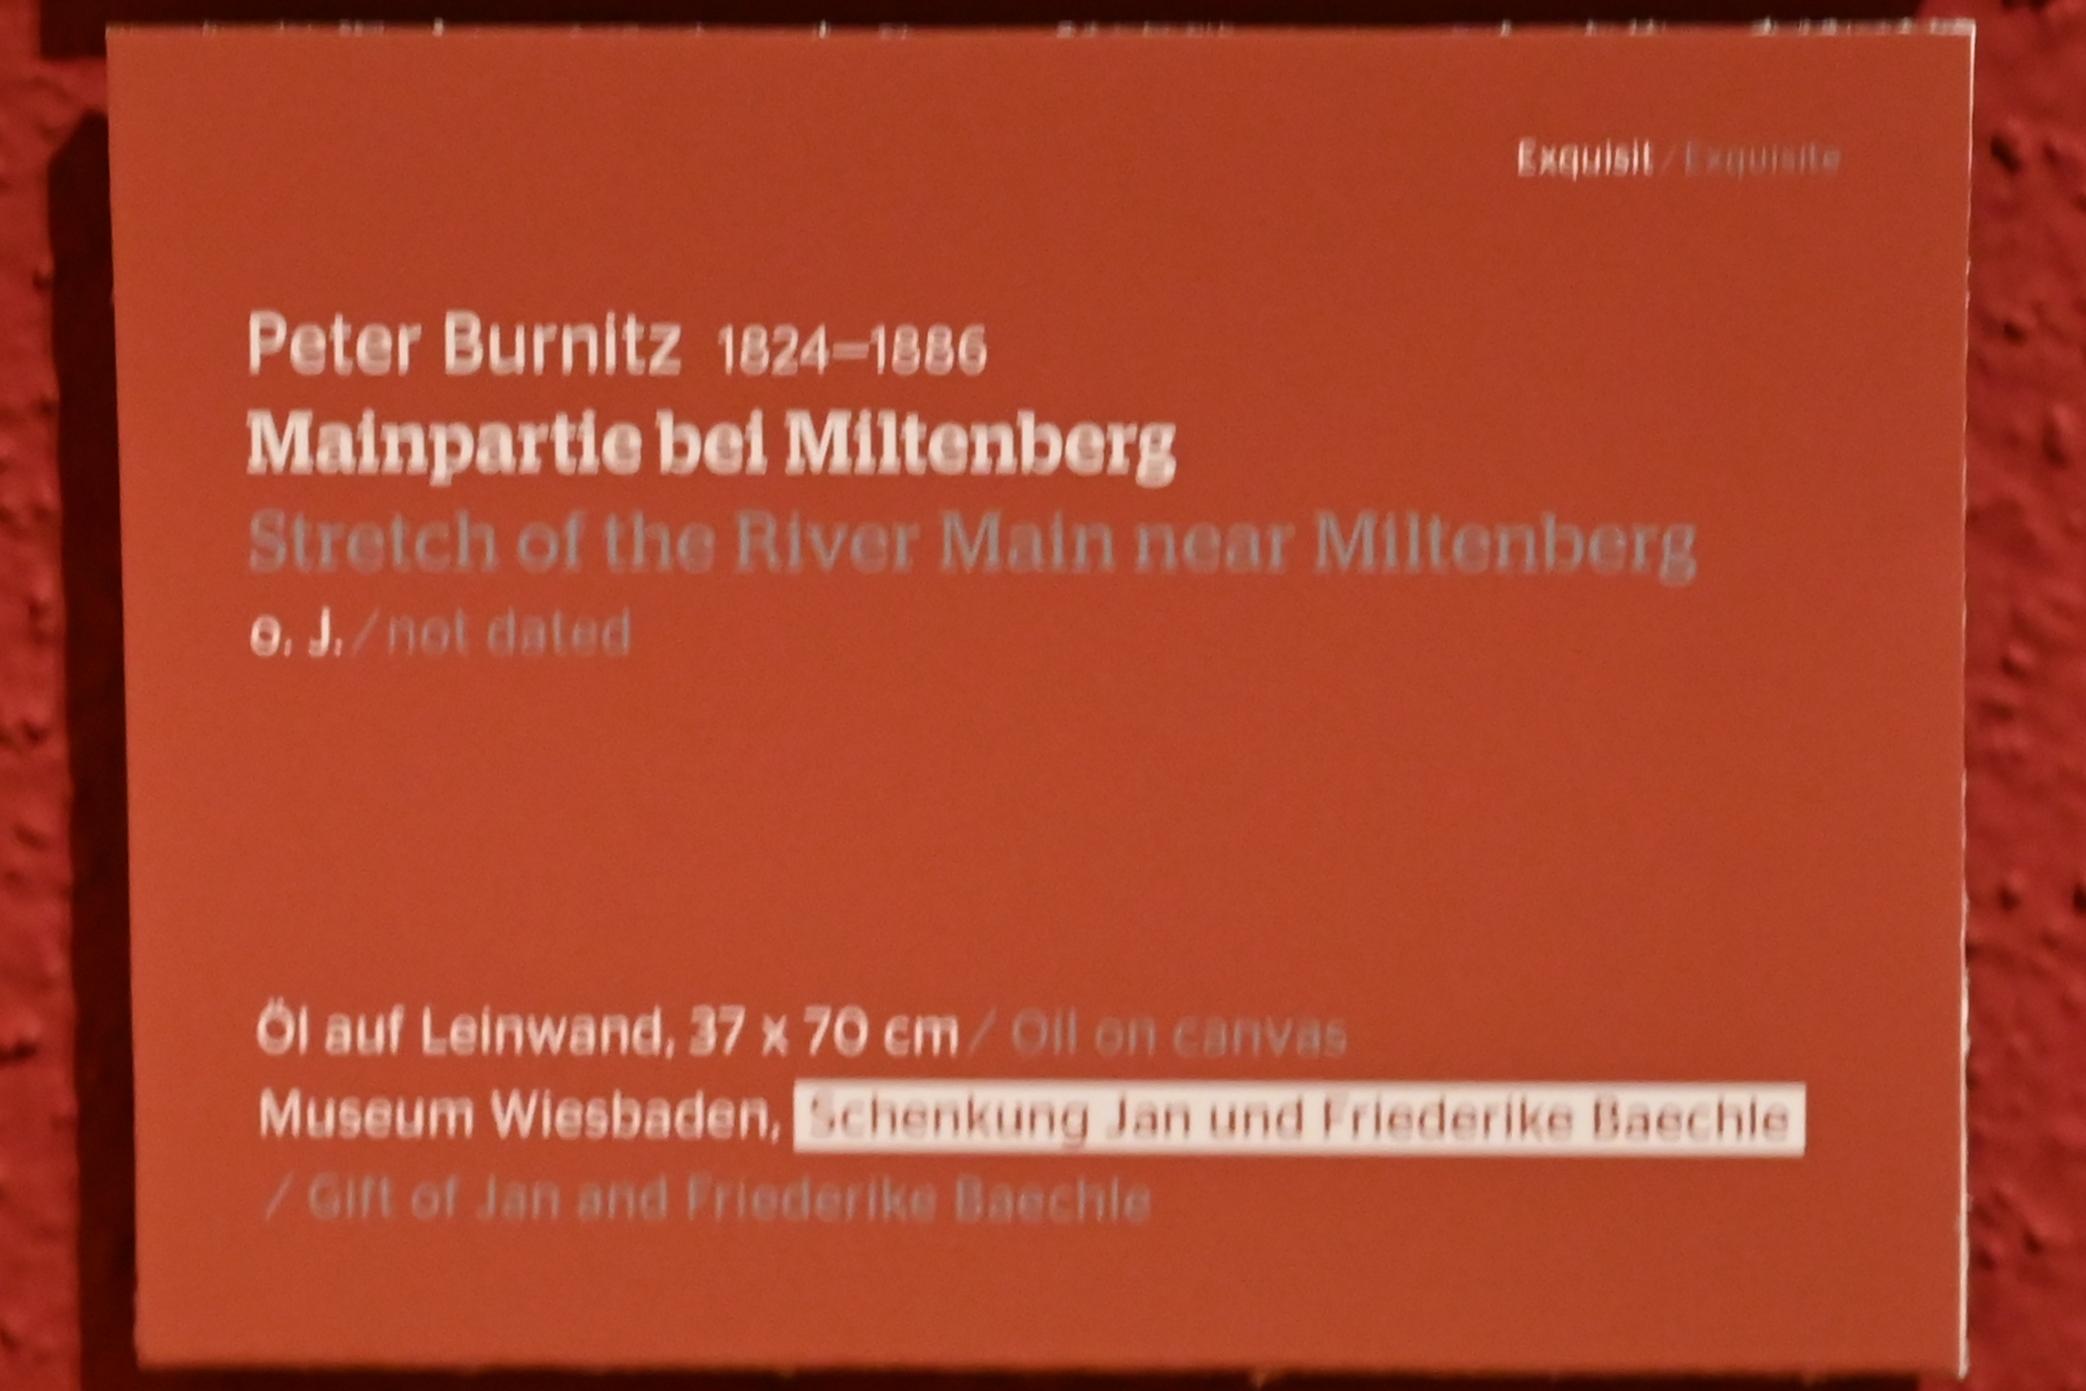 Peter Burnitz (1851–1865), Mainpartie bei Miltenberg, Wiesbaden, Museum Wiesbaden, Exquisit, Undatiert, Bild 2/2